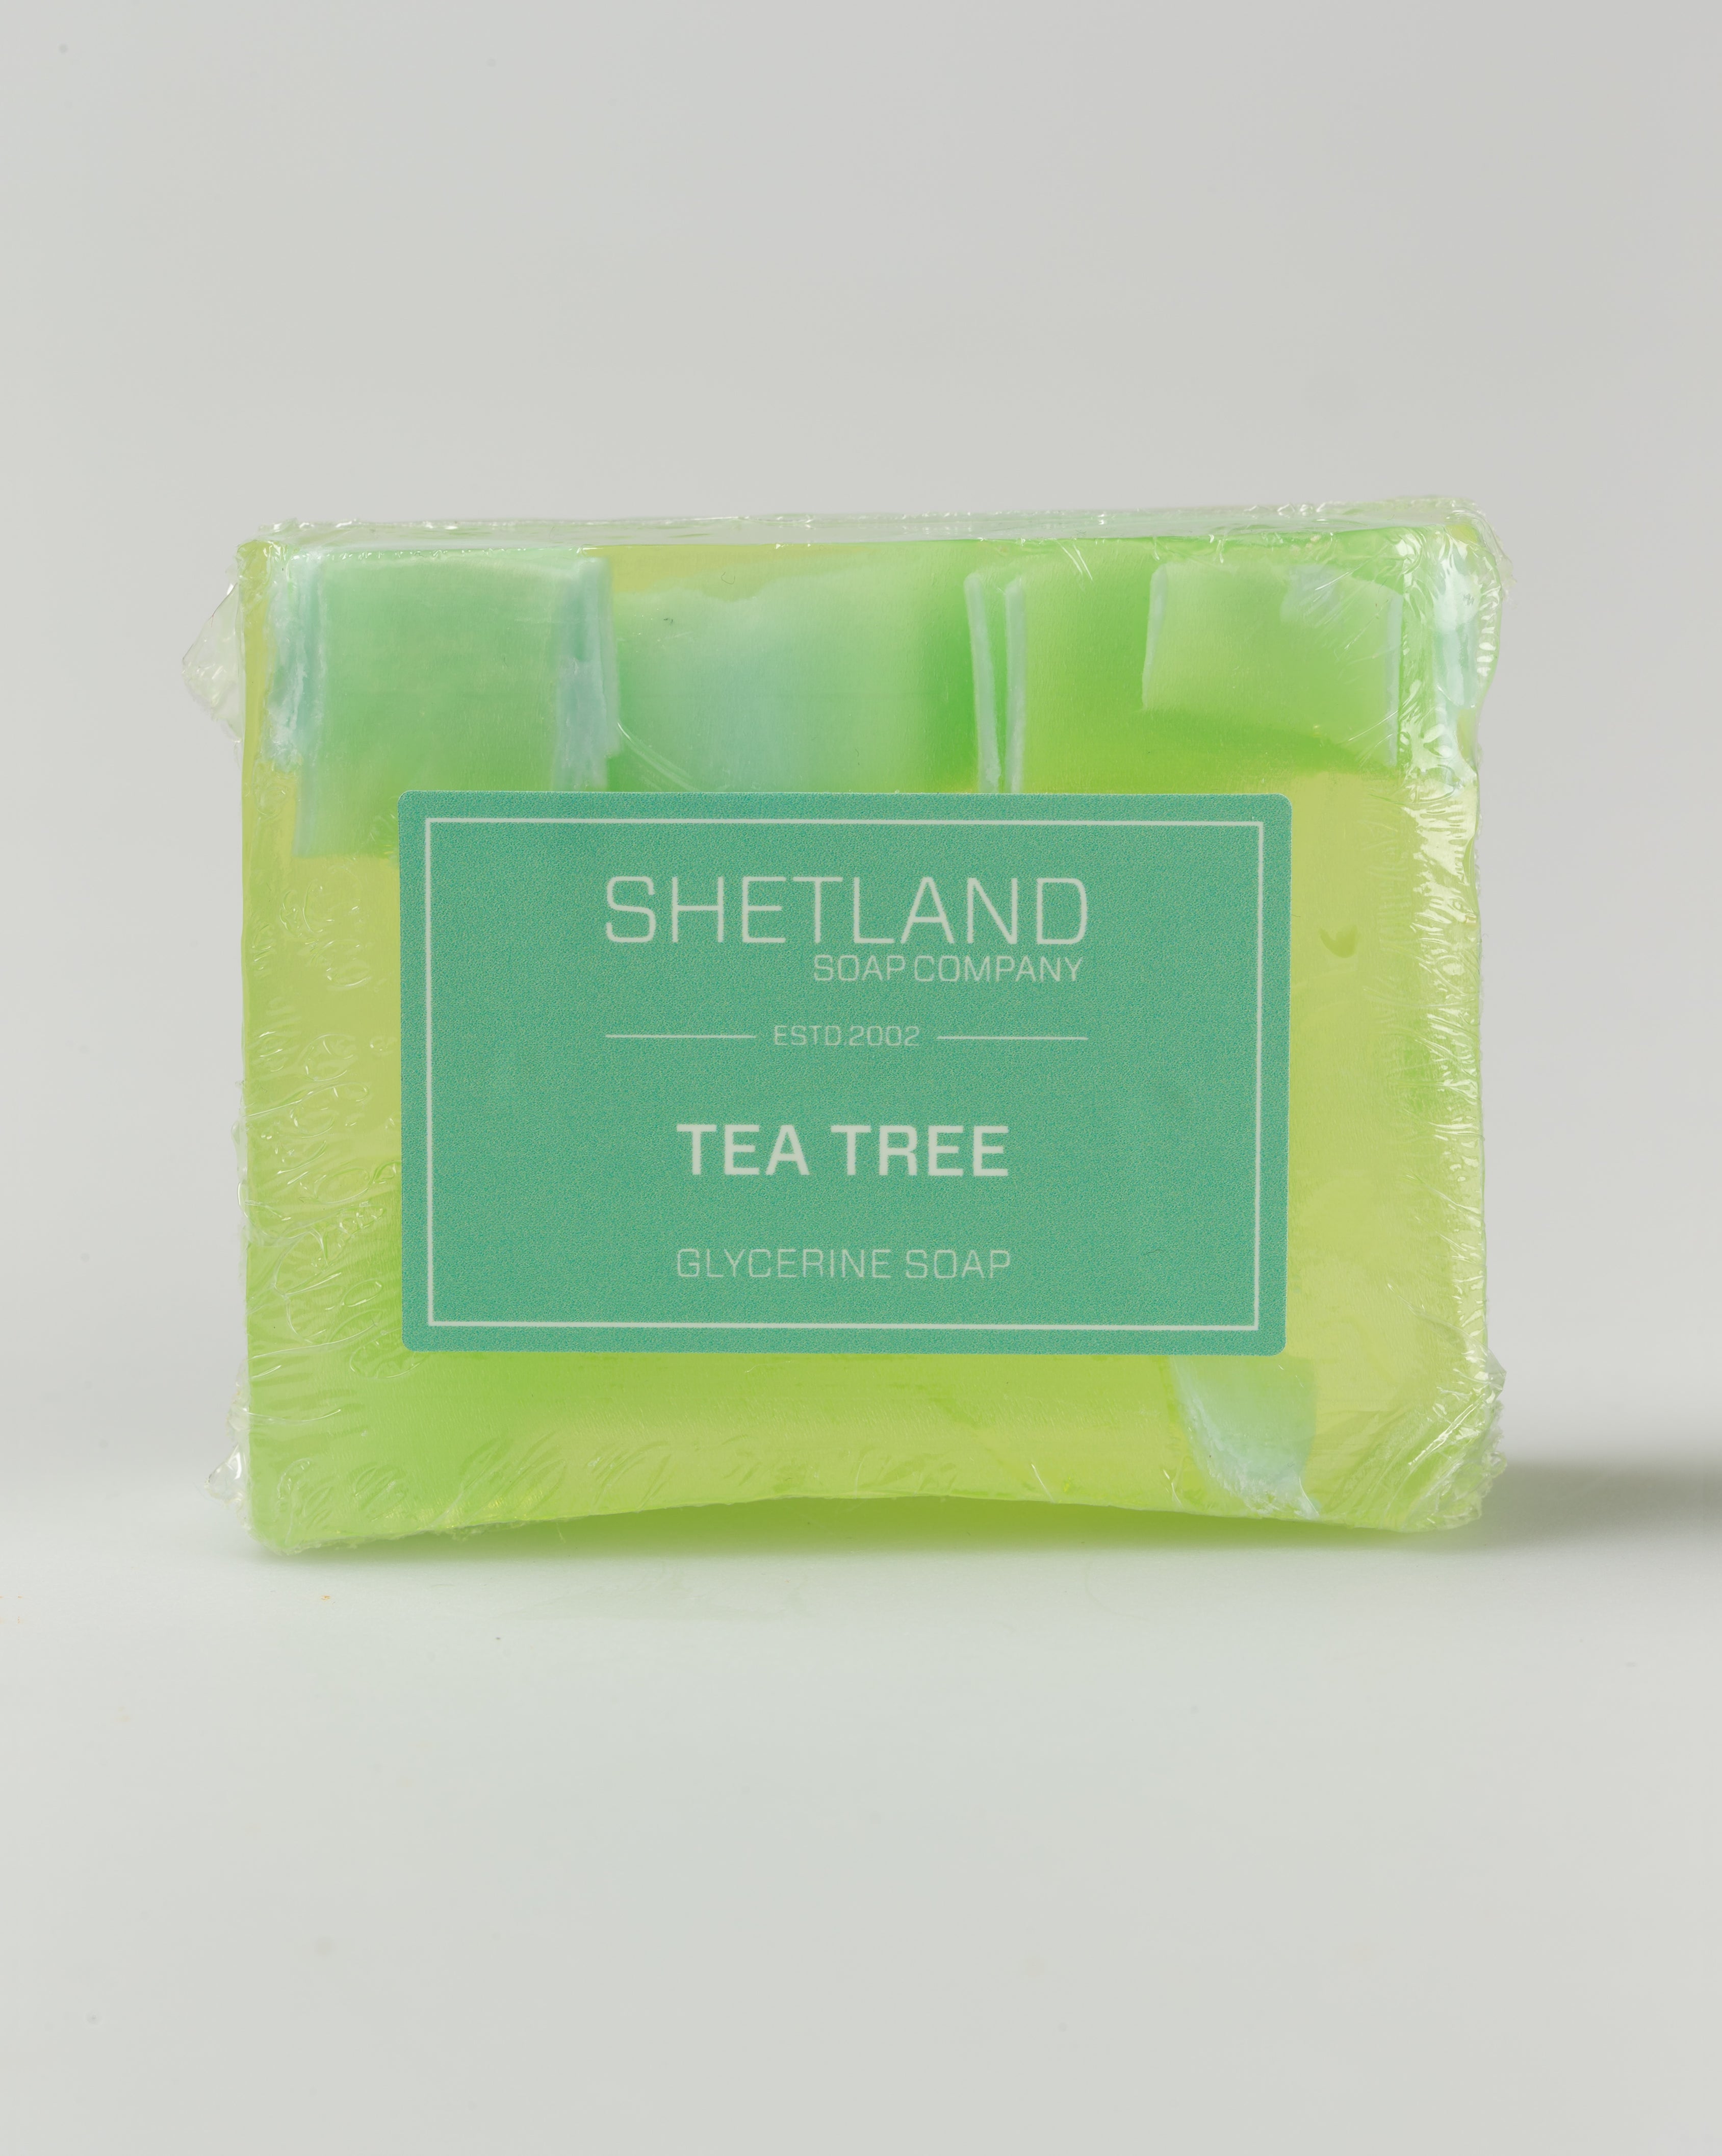 TEA TREE GLYCERINE SOAP